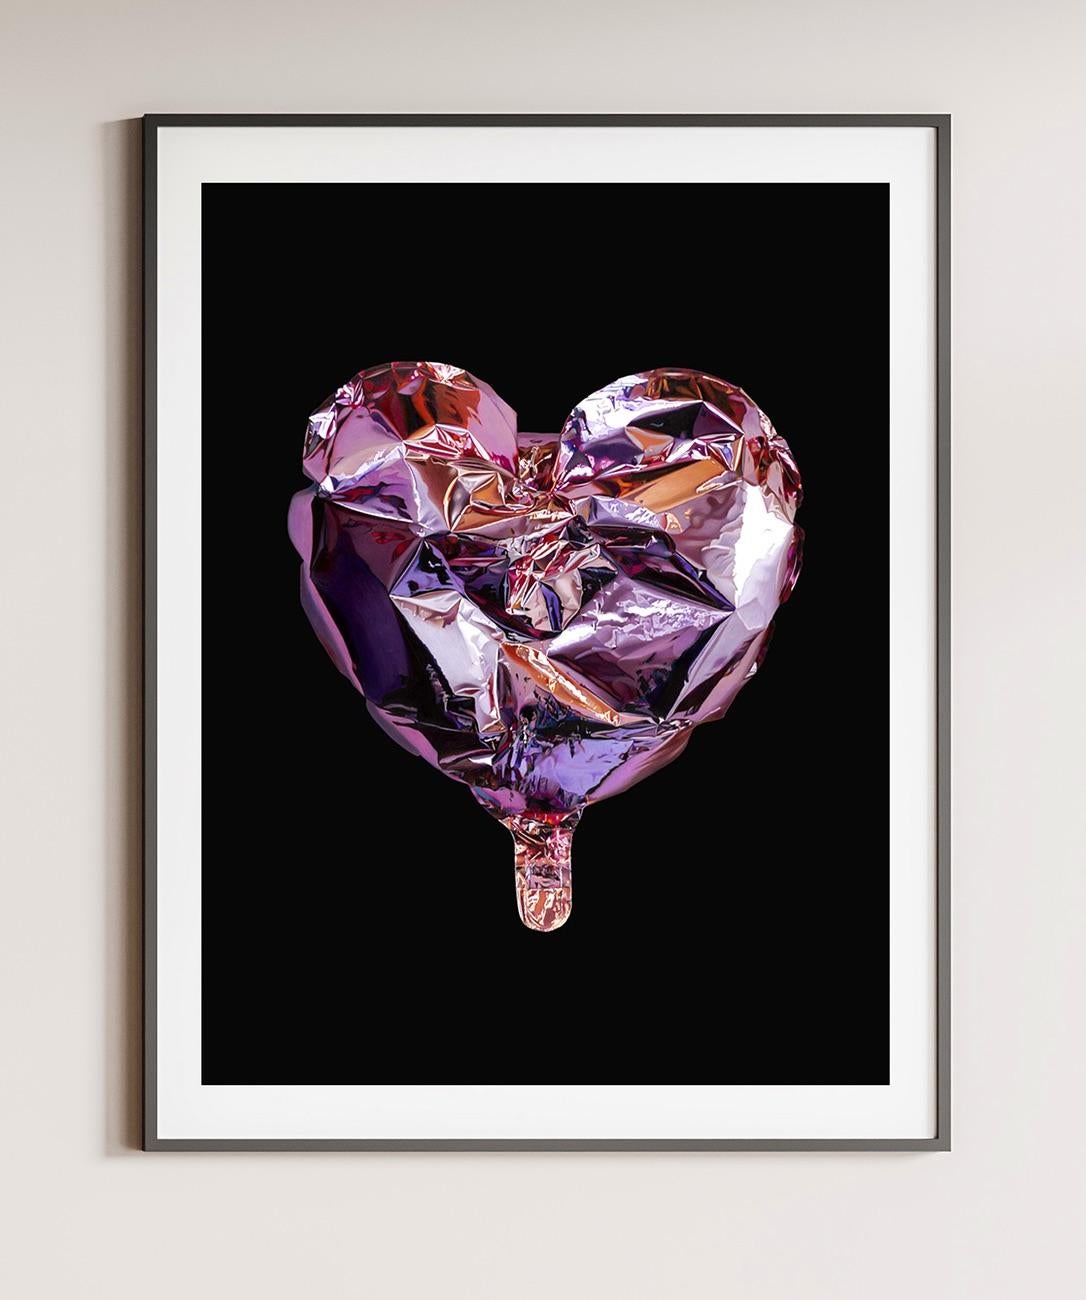 Rose Tinted , still life, heart balloon, wall art - Black Figurative Print by Jack Verheag